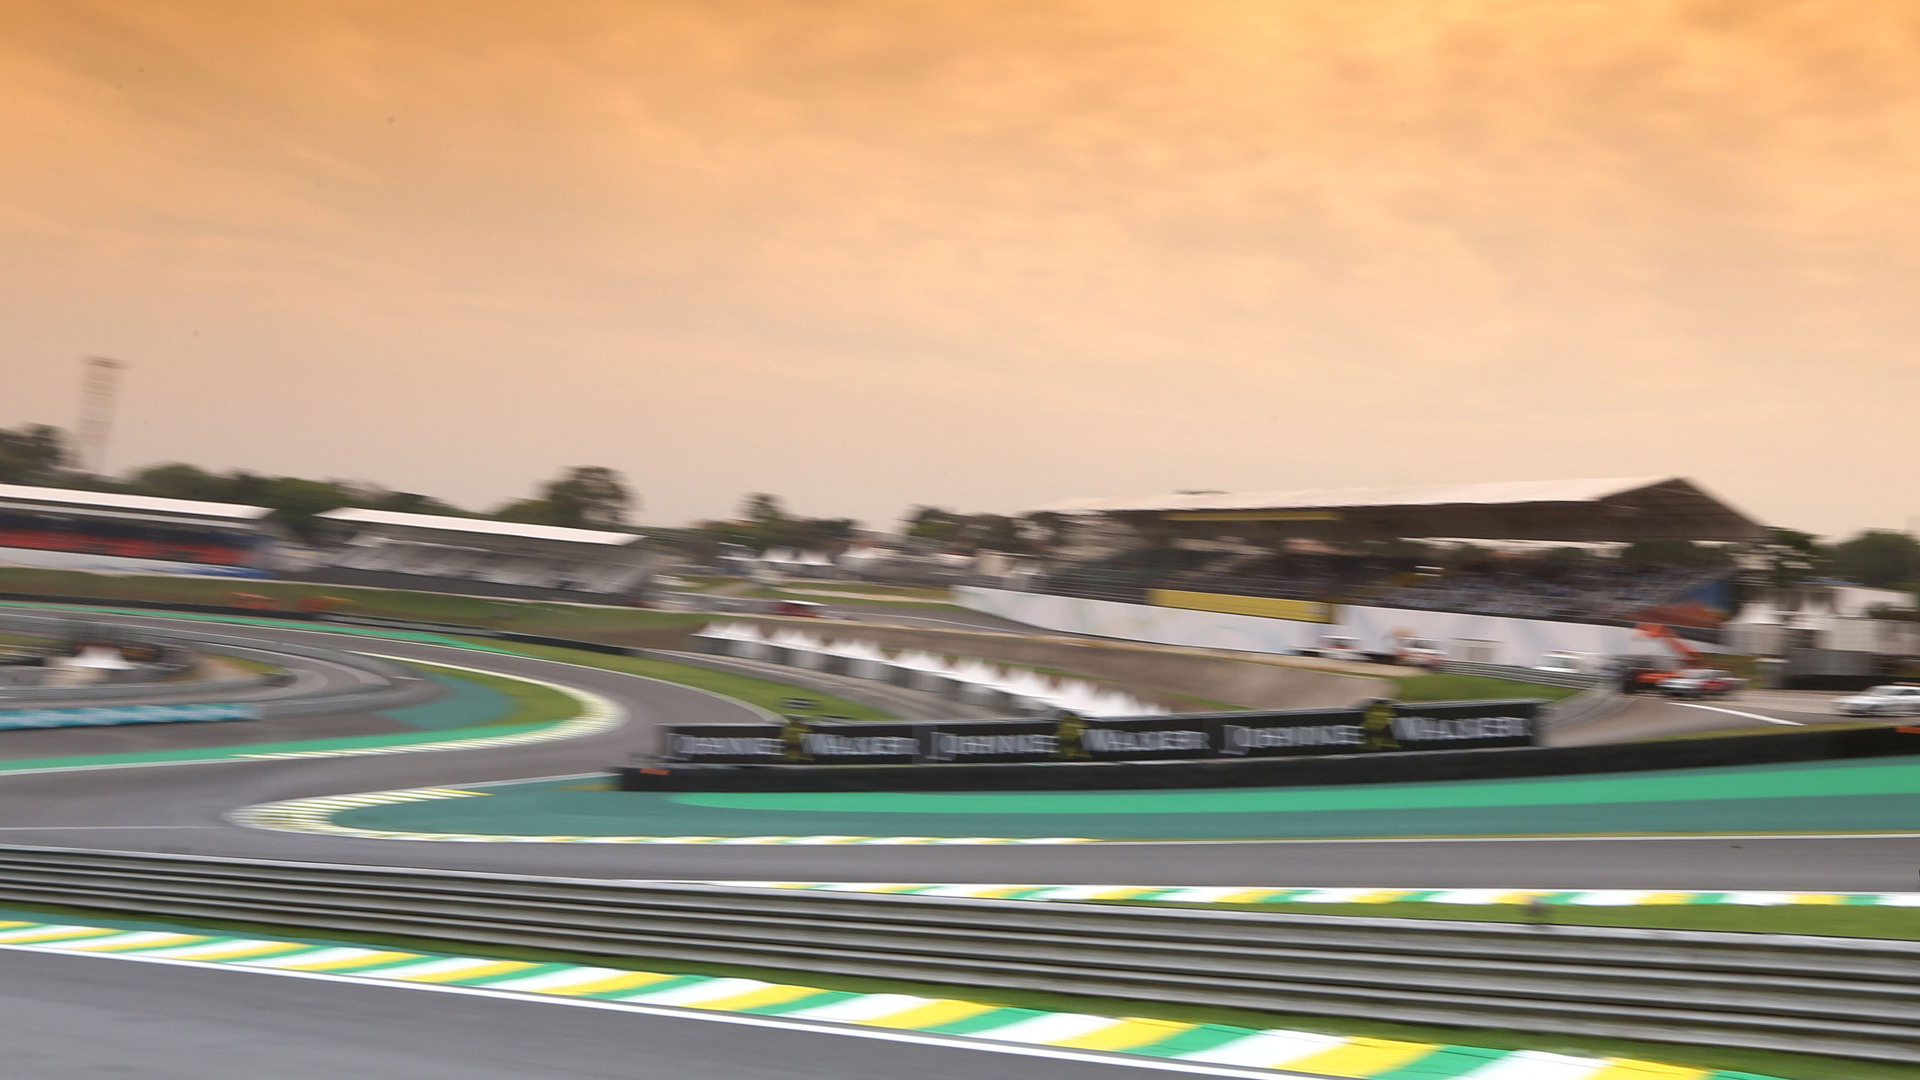 Autodromo Jose Carlos Pace, home of the Formula 1 Brazilian Grand Prix